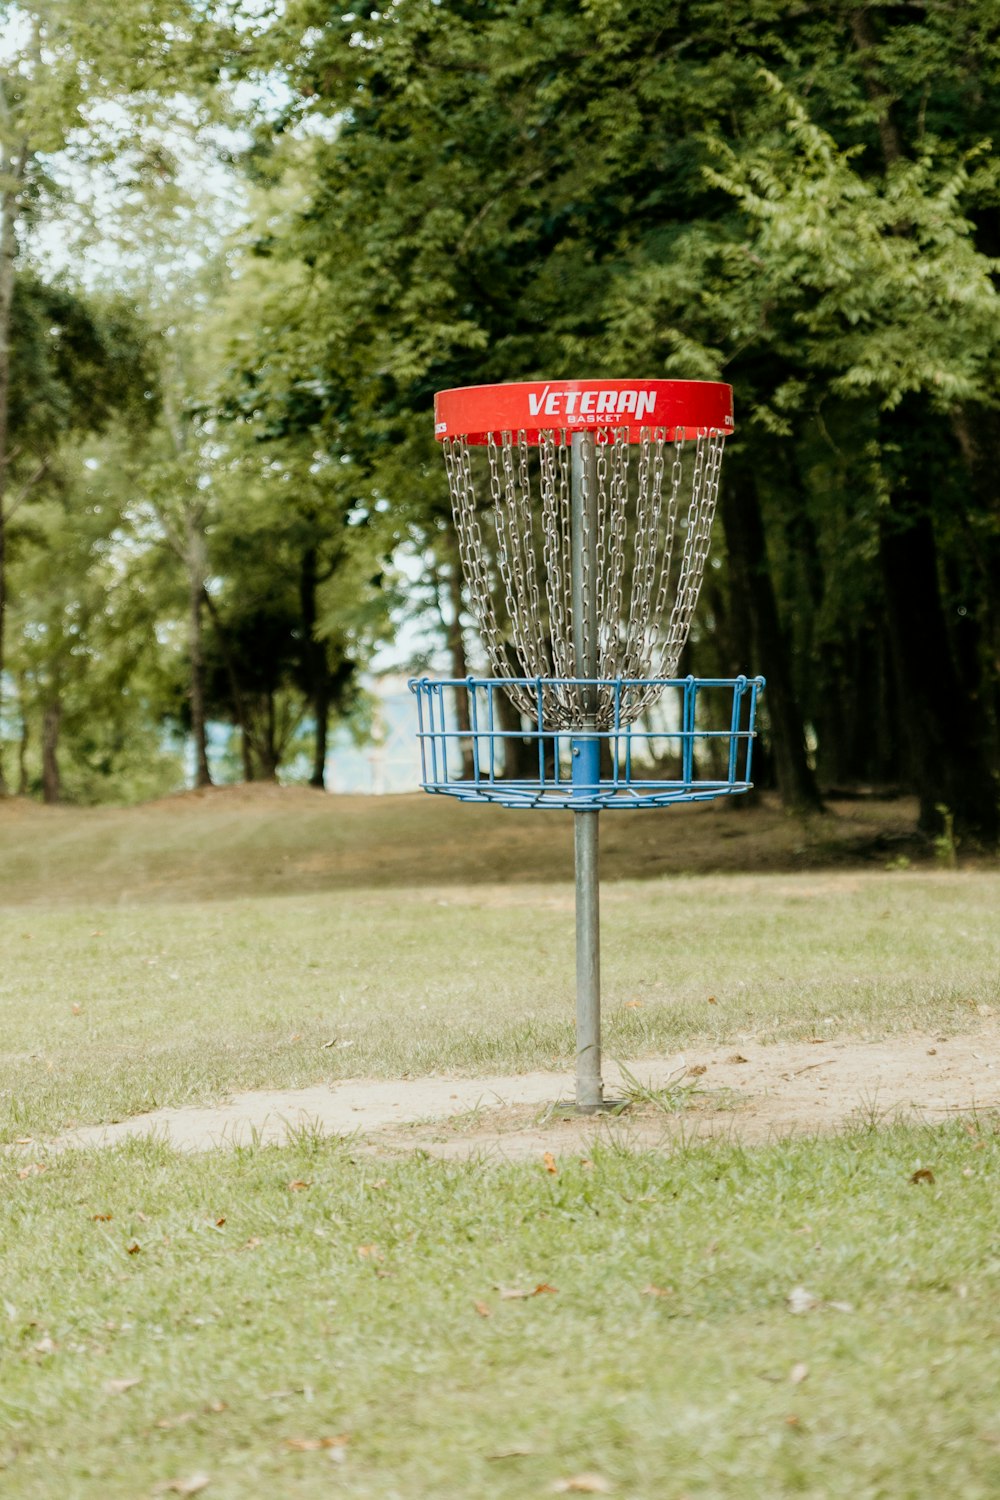 a basketball hoop in a park